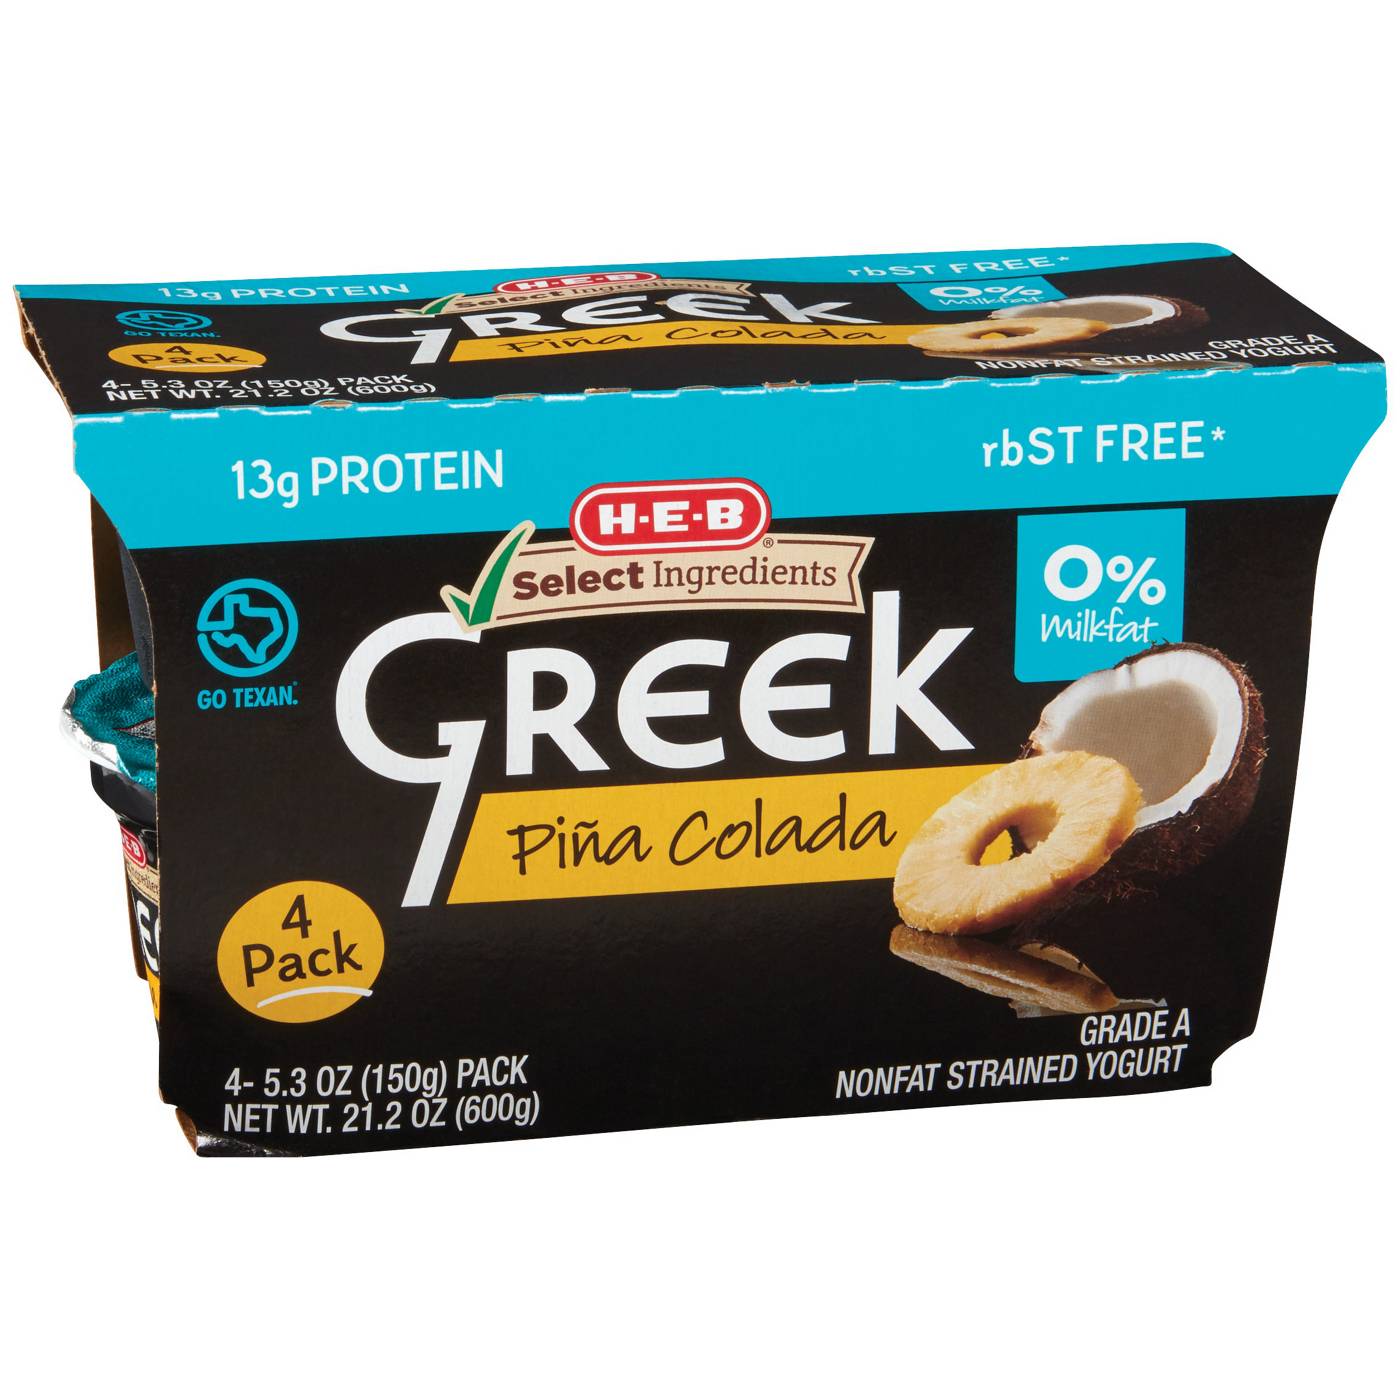 H-E-B 13g Protein Nonfat Greek Yogurt - Piña Colada; image 1 of 2